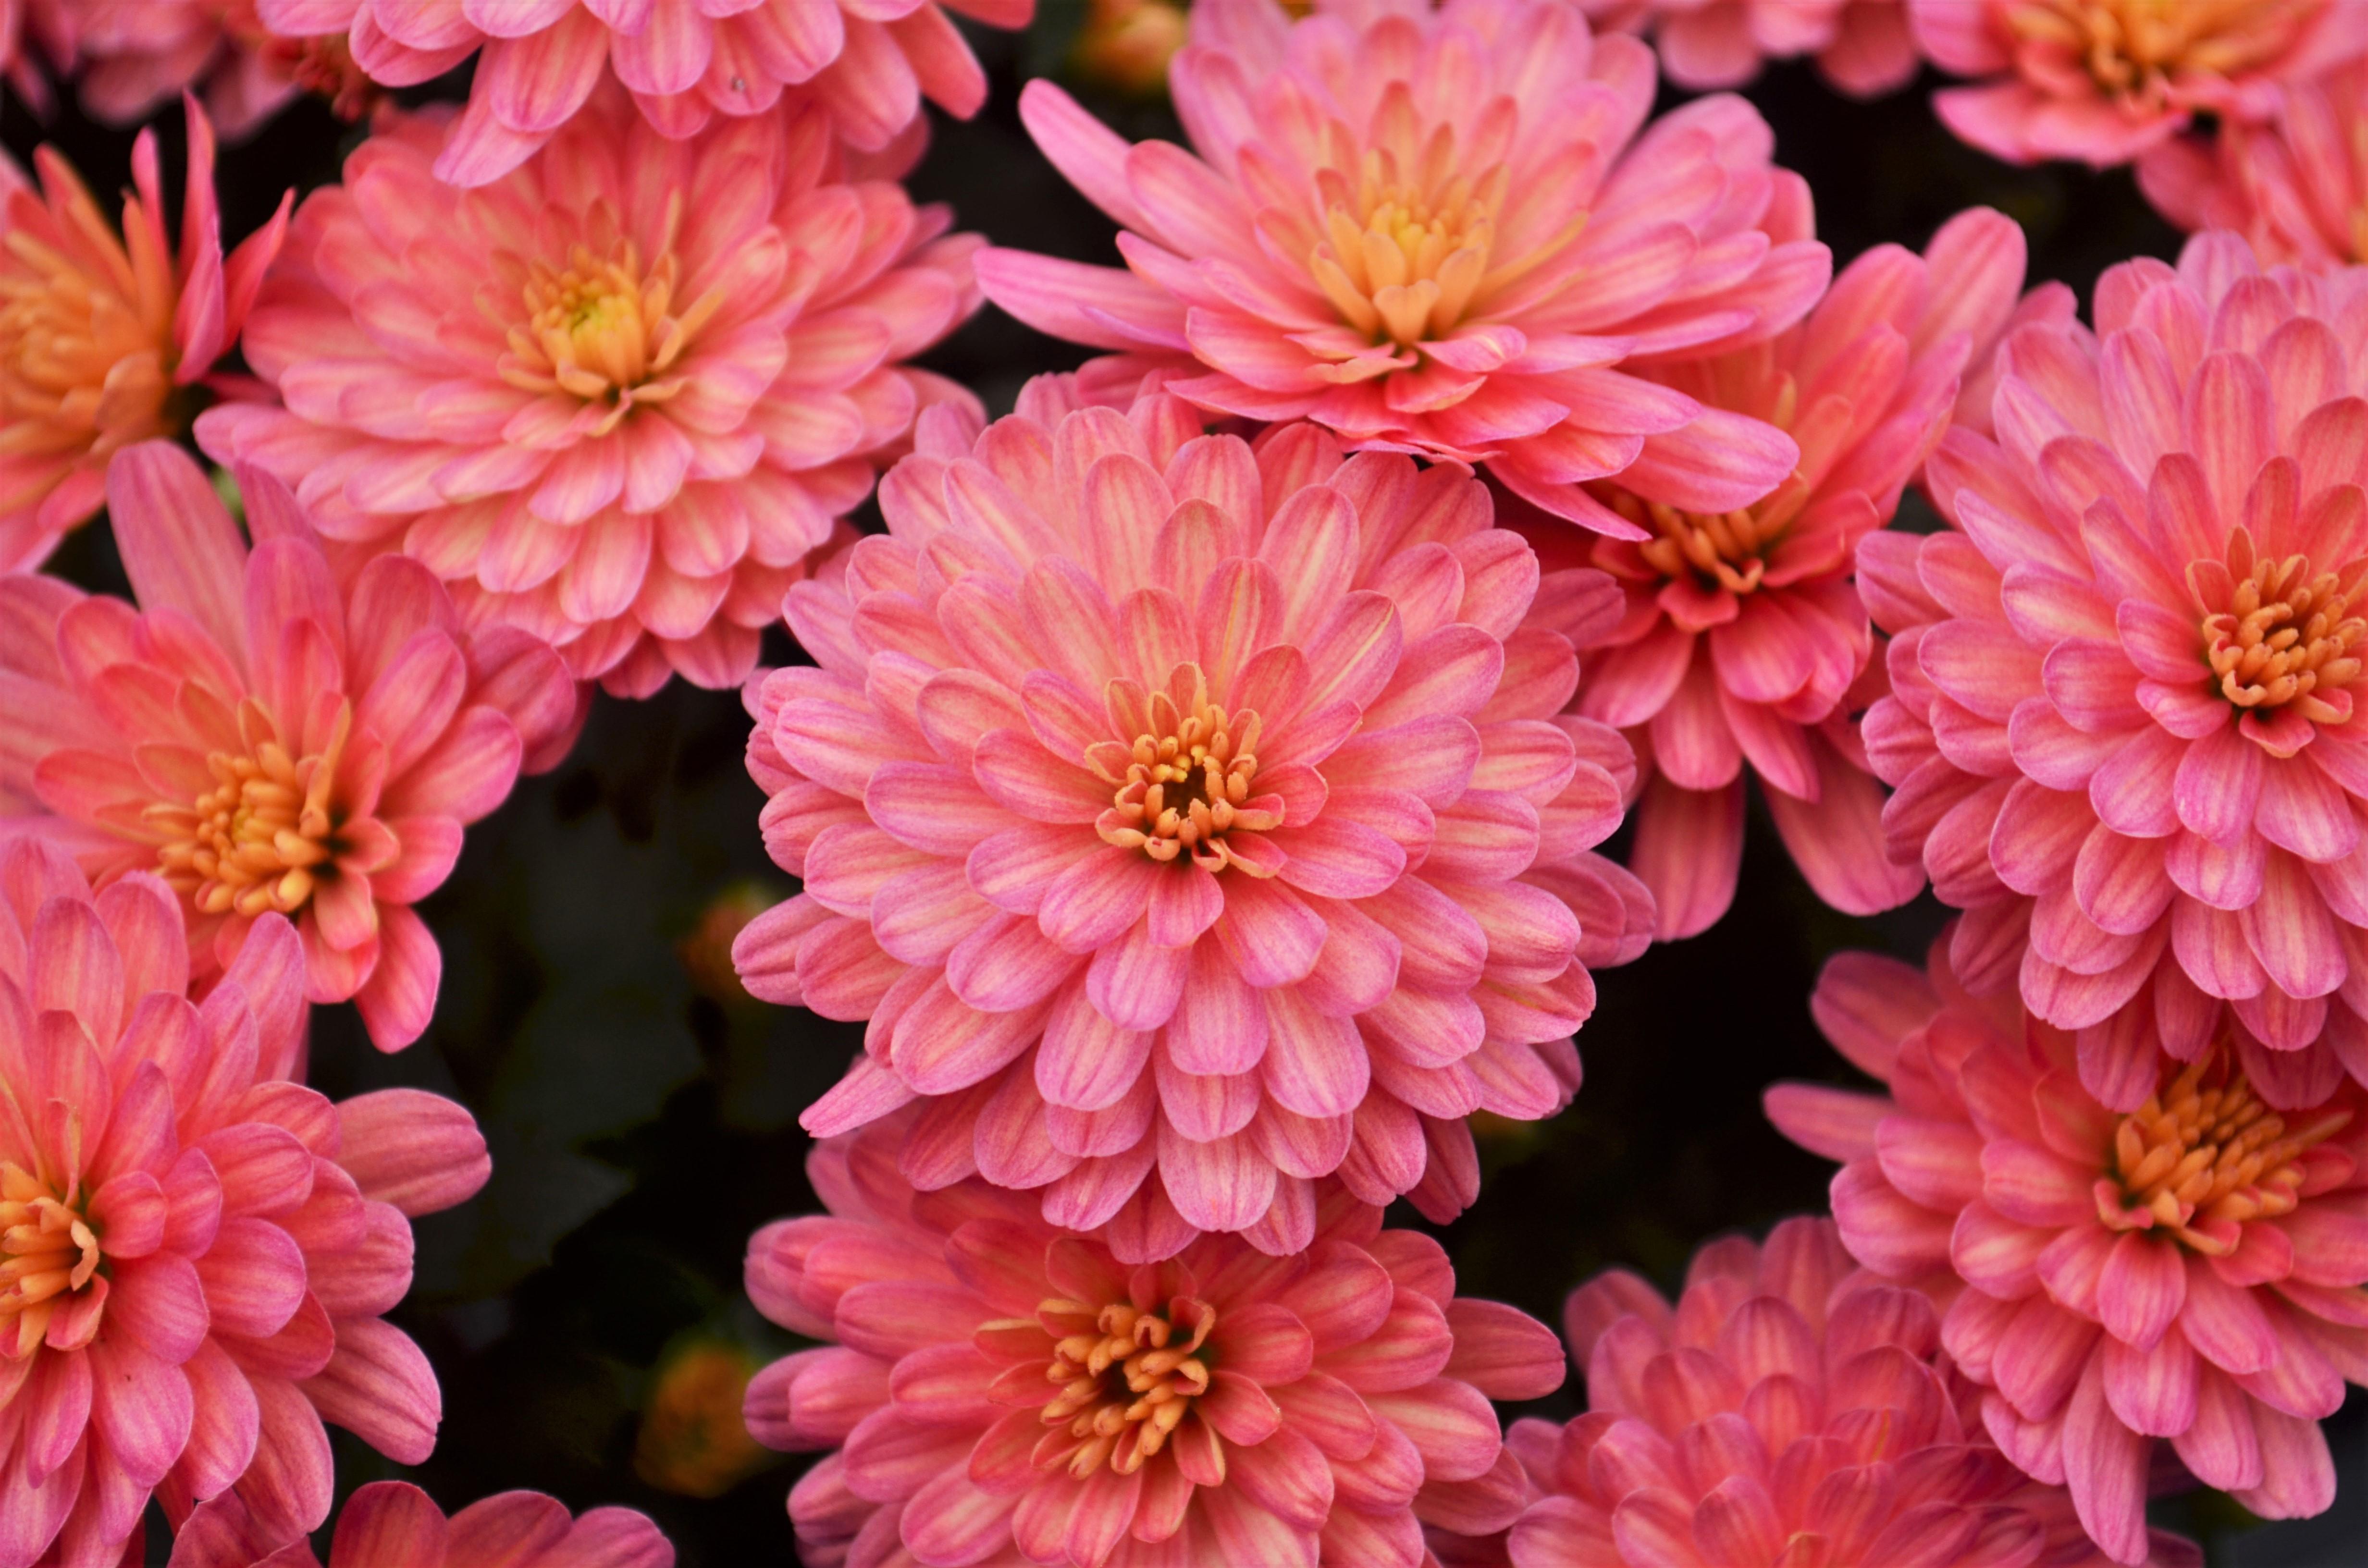 Chrysanthemum Jacqueline 'Peach' - Mum from Hillcrest Nursery